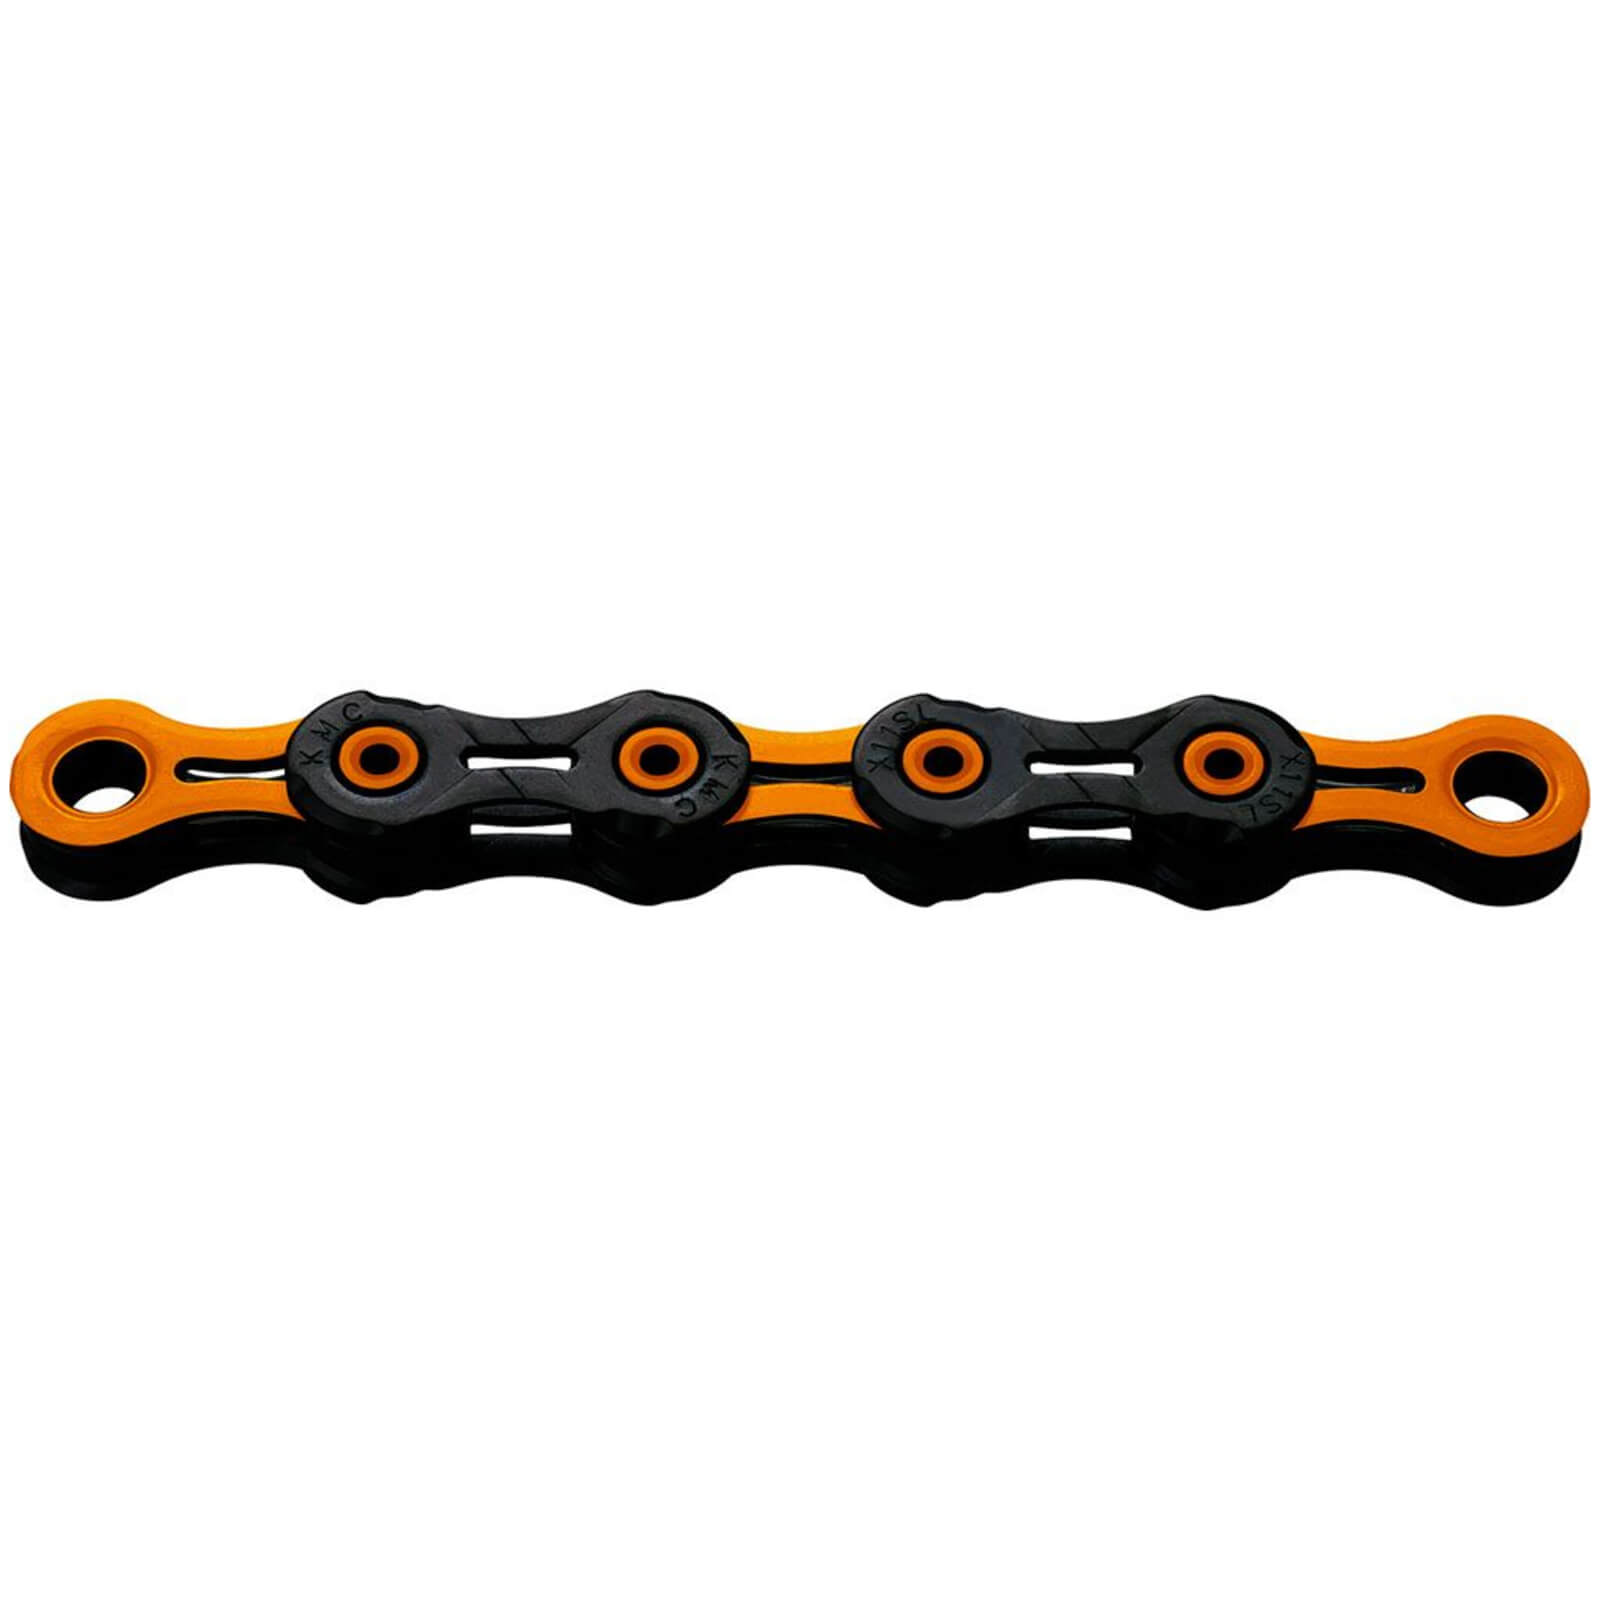 KMC DLC 11 Speed Chain - 116 Links - Black/Orange